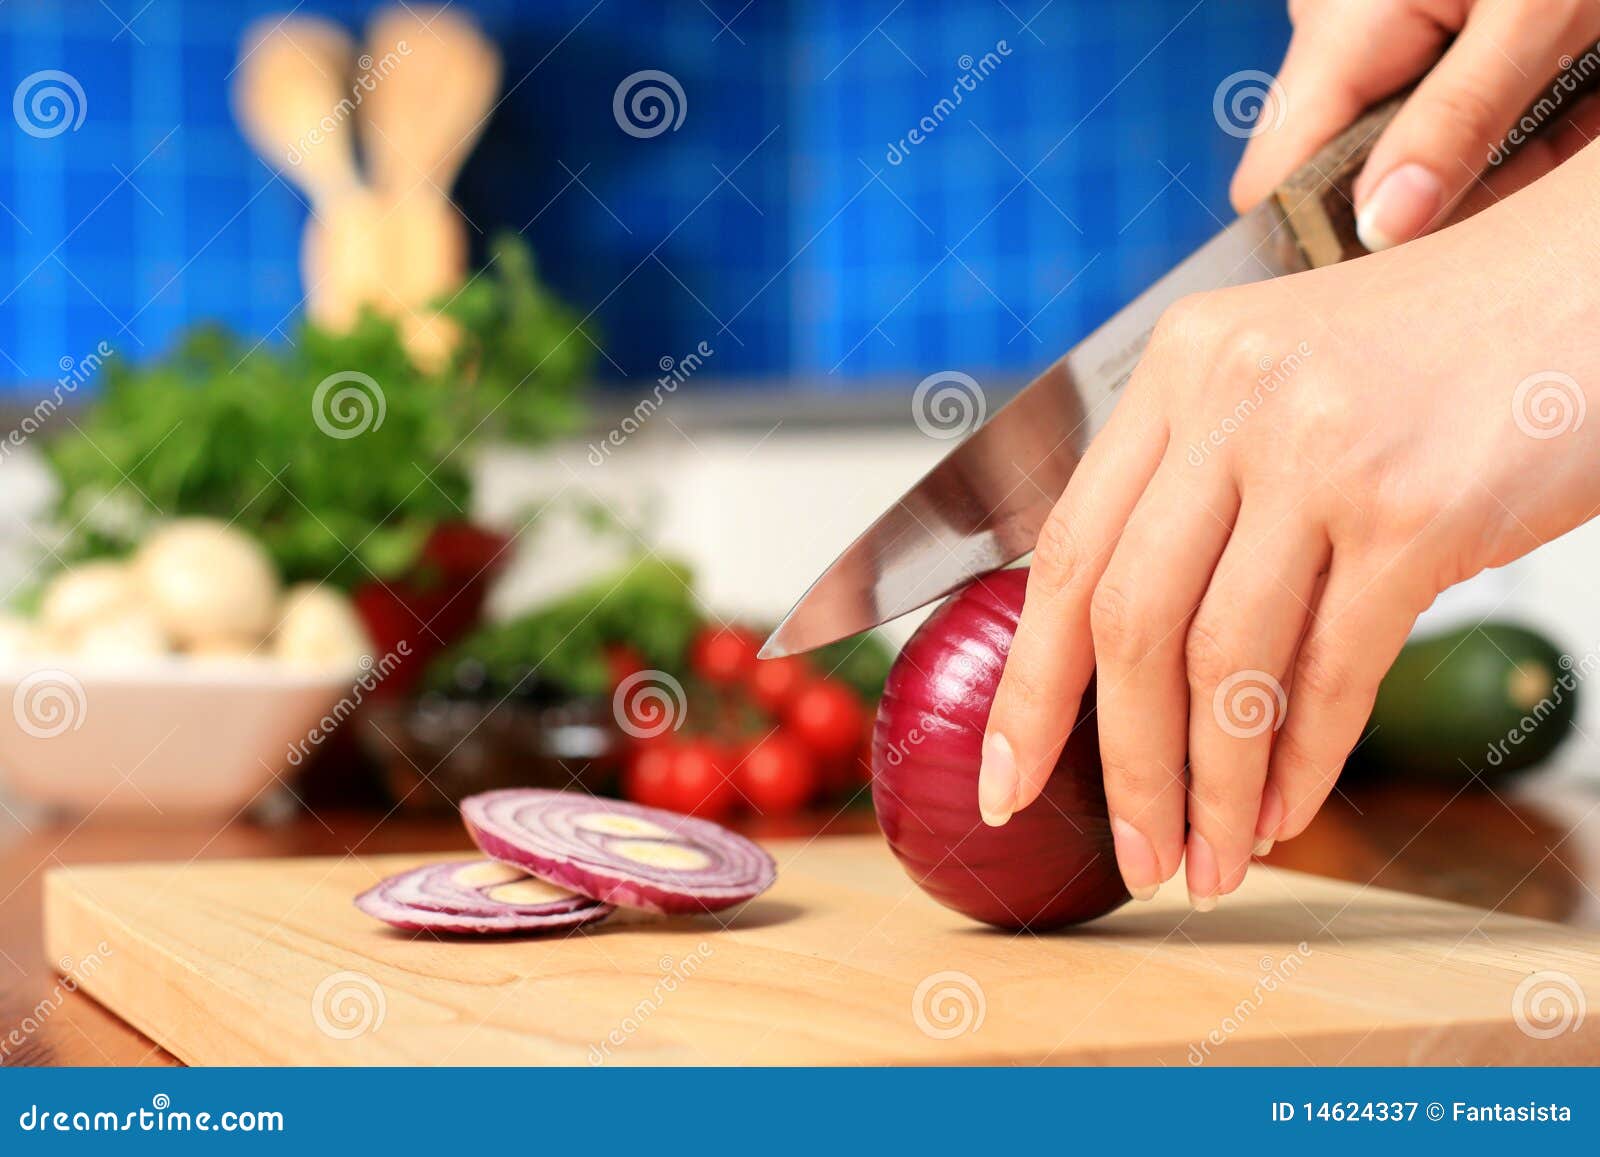 female chopping food ingredients.